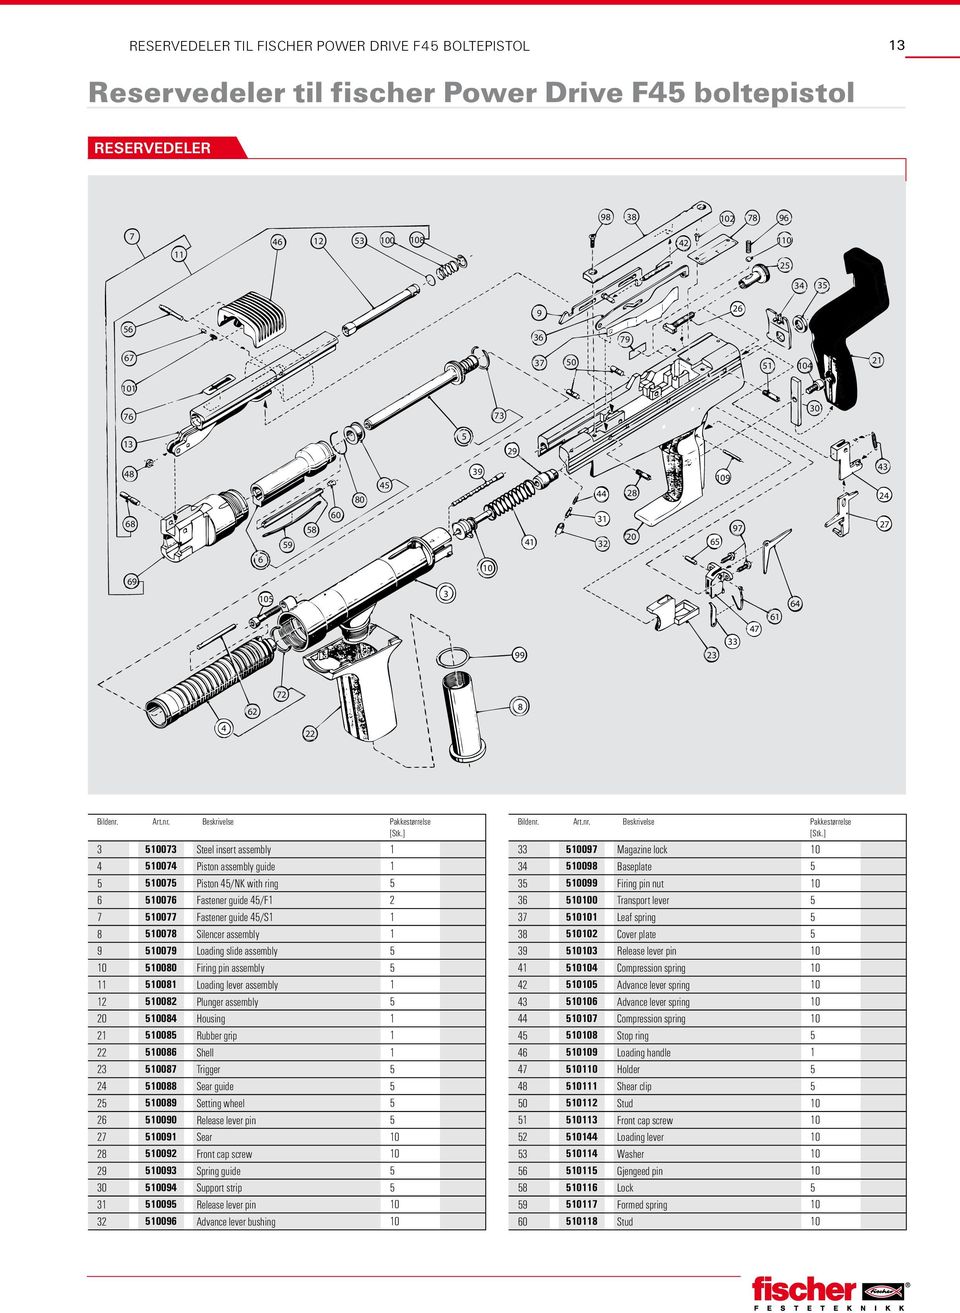 ] 3 510073 Steel insert assembly 1 4 510074 Piston assembly guide 1 5 510075 Piston 45/NK with ring 5 6 510076 Fastener guide 45/F1 2 7 510077 Fastener guide 45/S1 1 8 510078 Silencer assembly 1 9